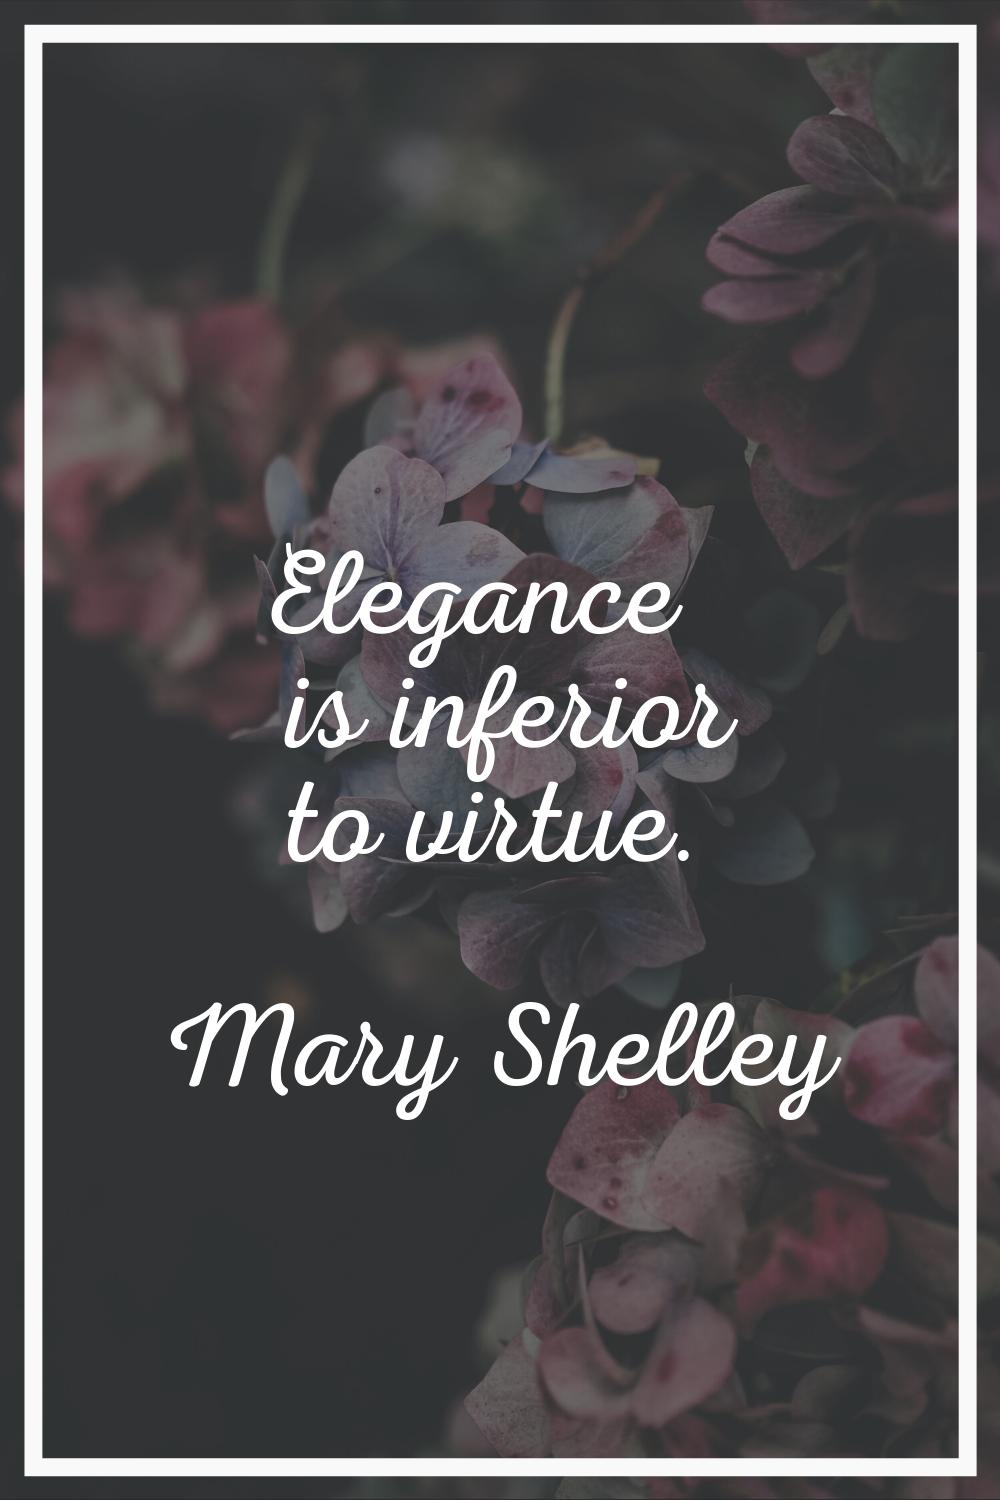 Elegance is inferior to virtue.